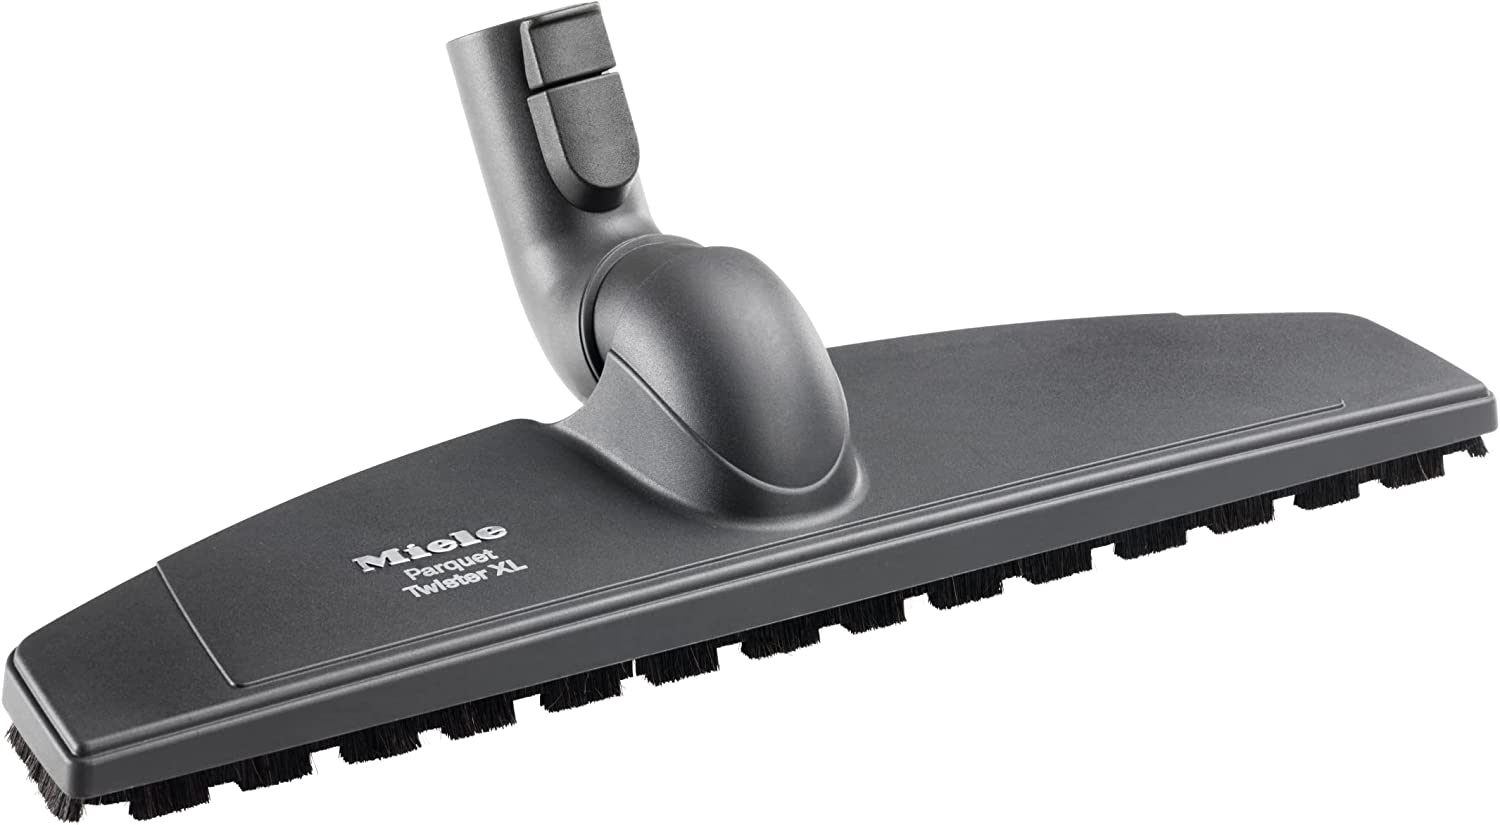 Miele SBB 400-3 Parquet Twister XL Smooth Floor Brush, Black